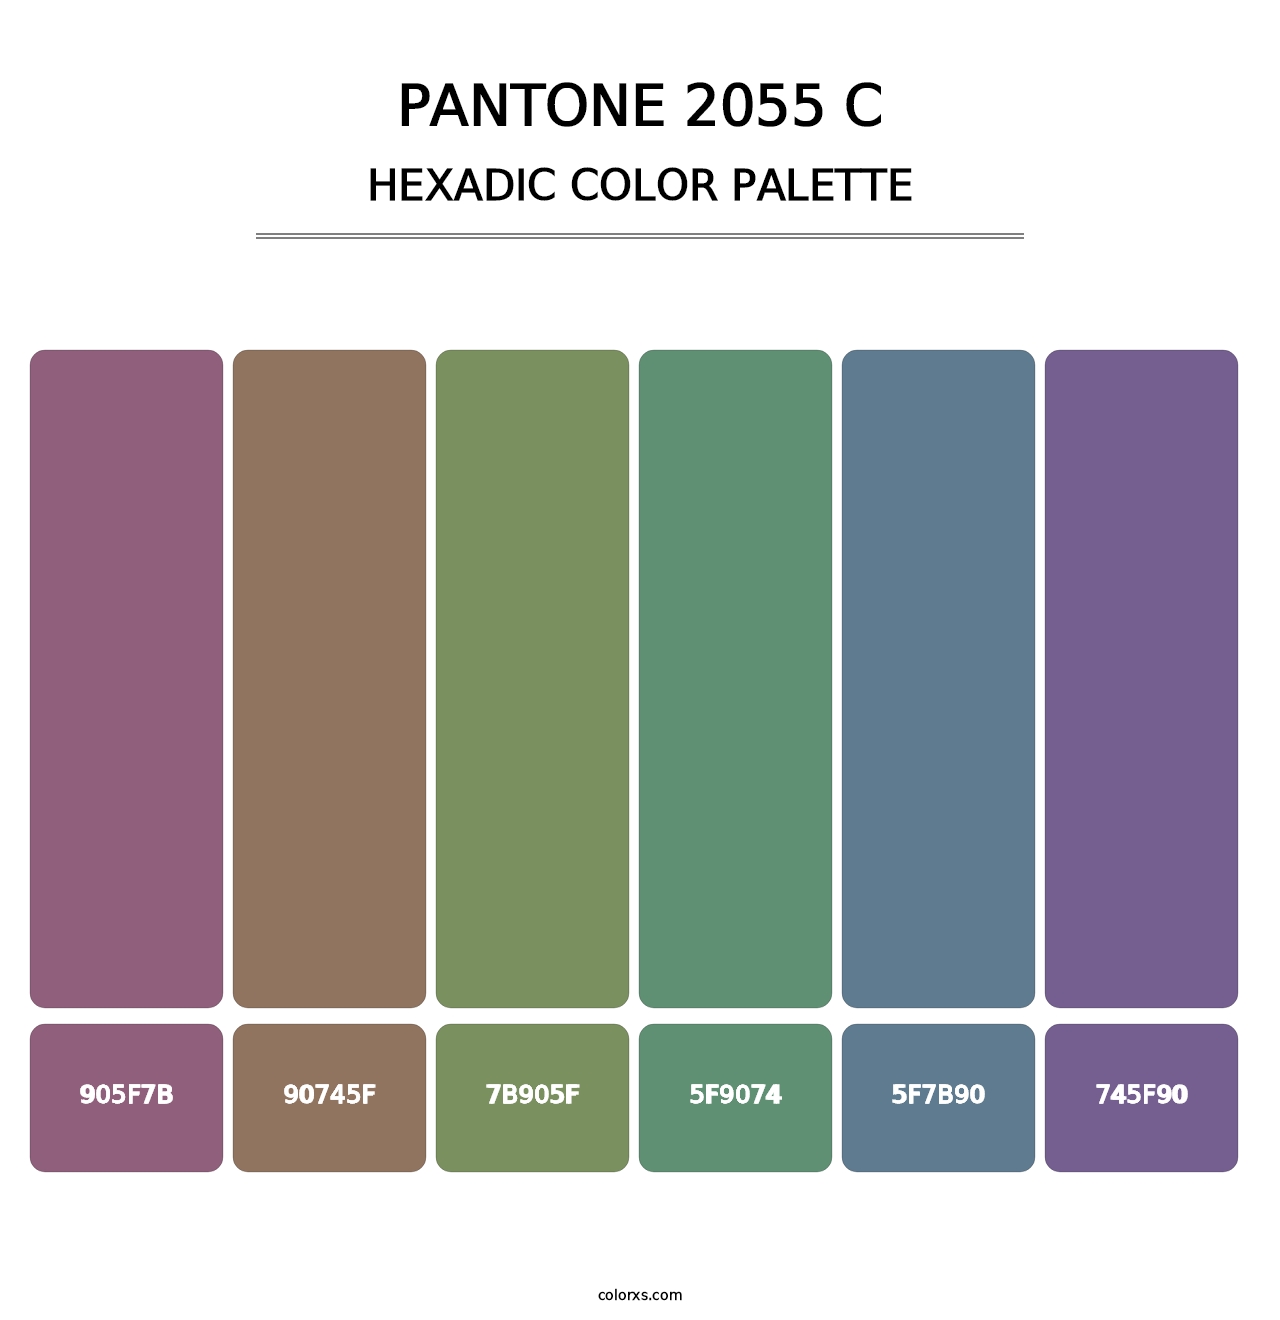 PANTONE 2055 C - Hexadic Color Palette